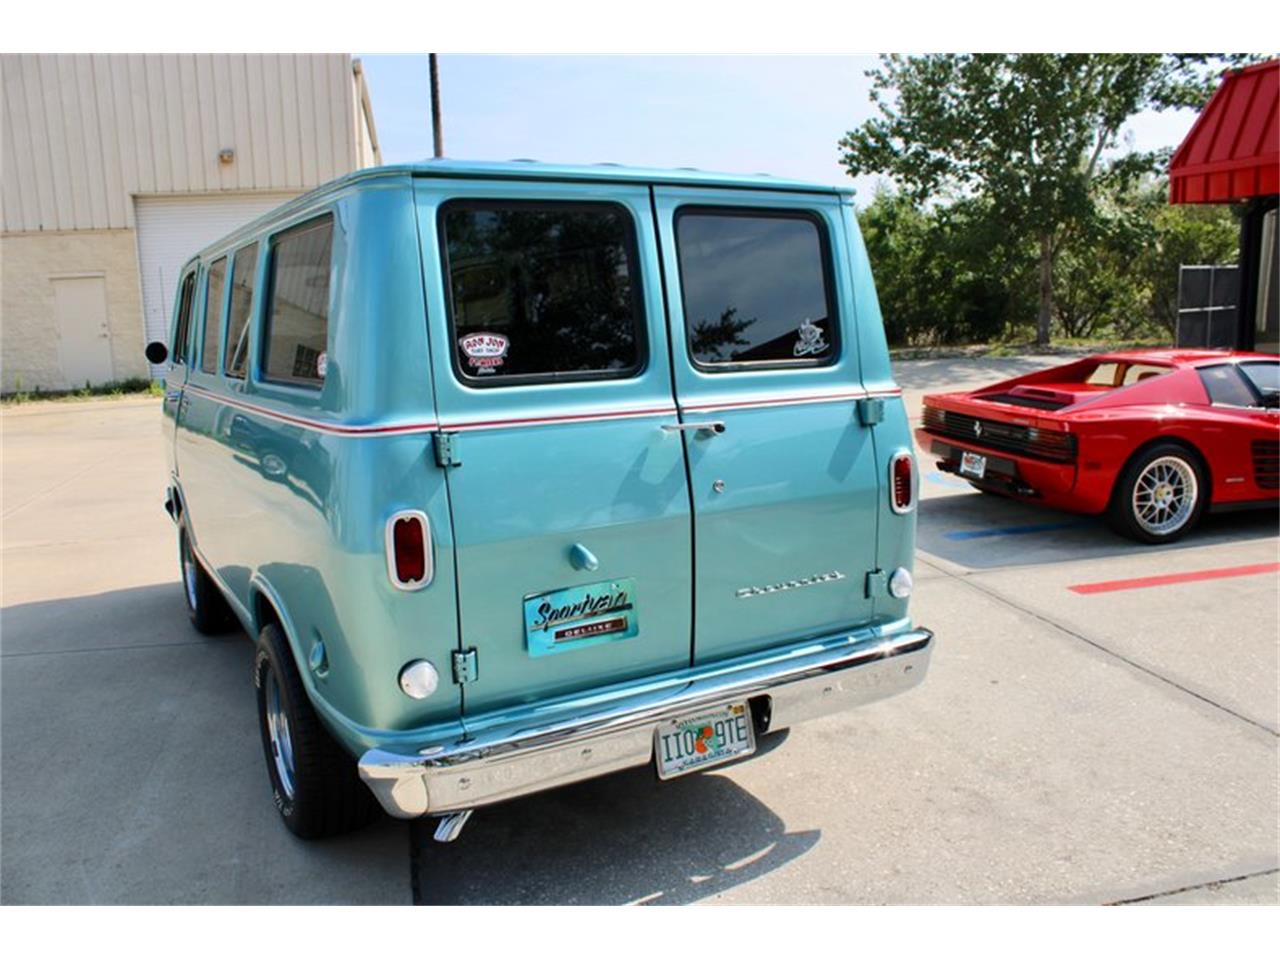 1965 chevy passenger van for sale in california